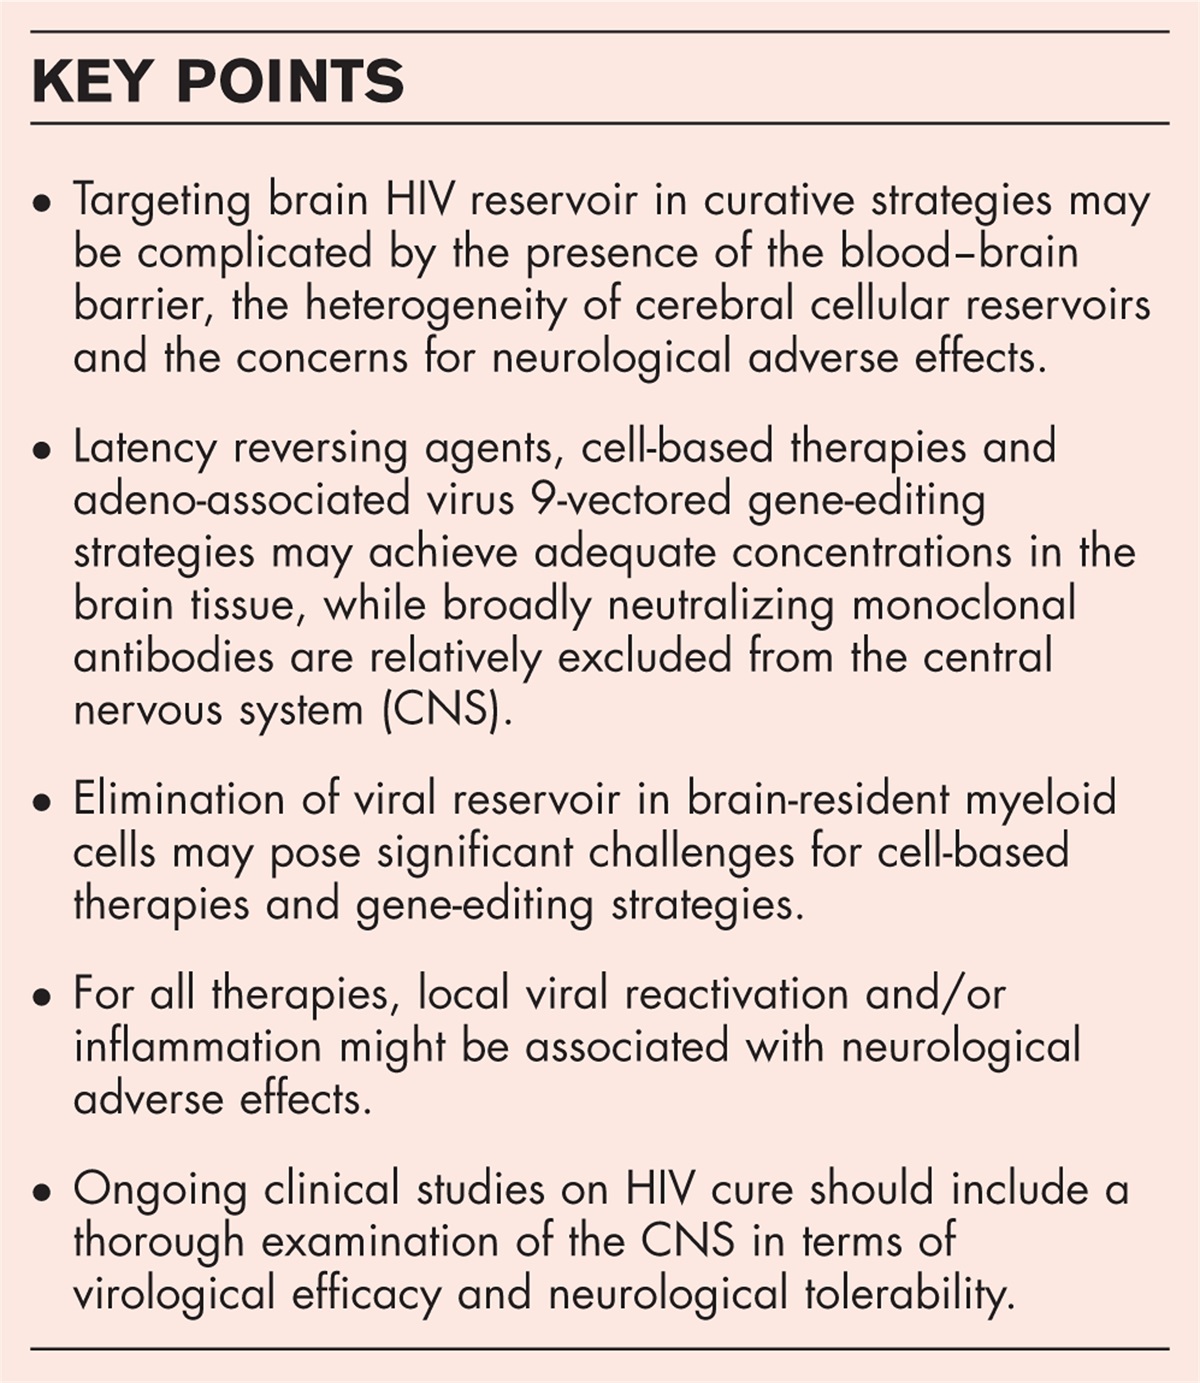 Strategies to target the central nervous system HIV reservoir